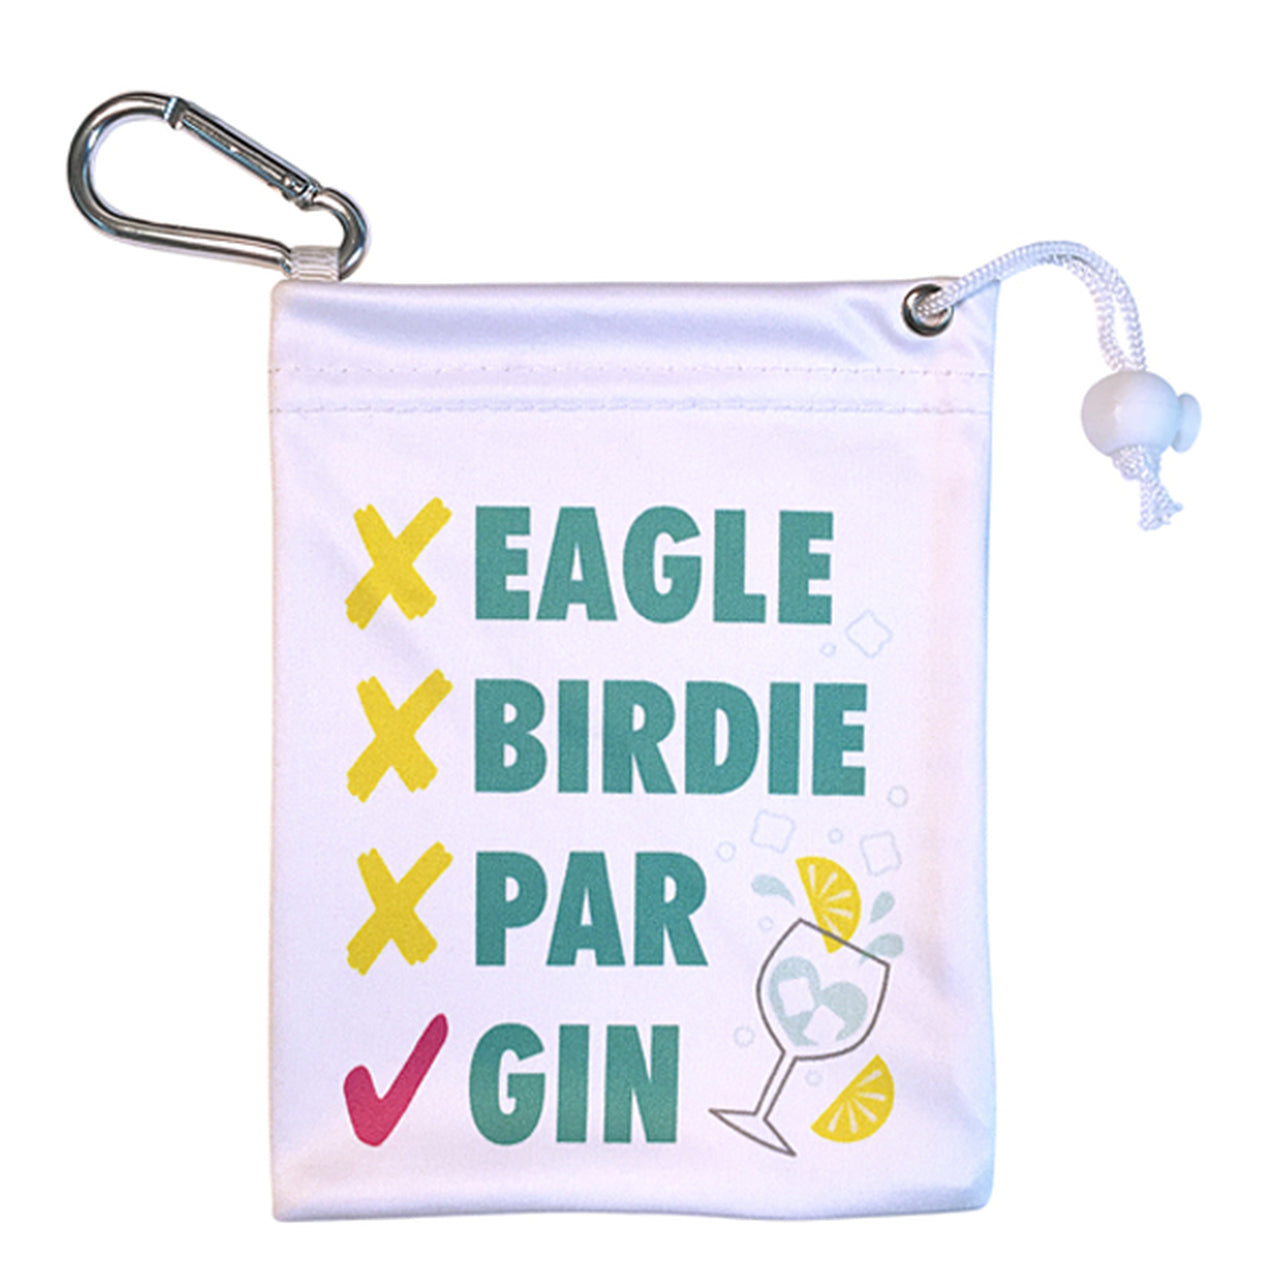 Gin Tee & Accessory Bag